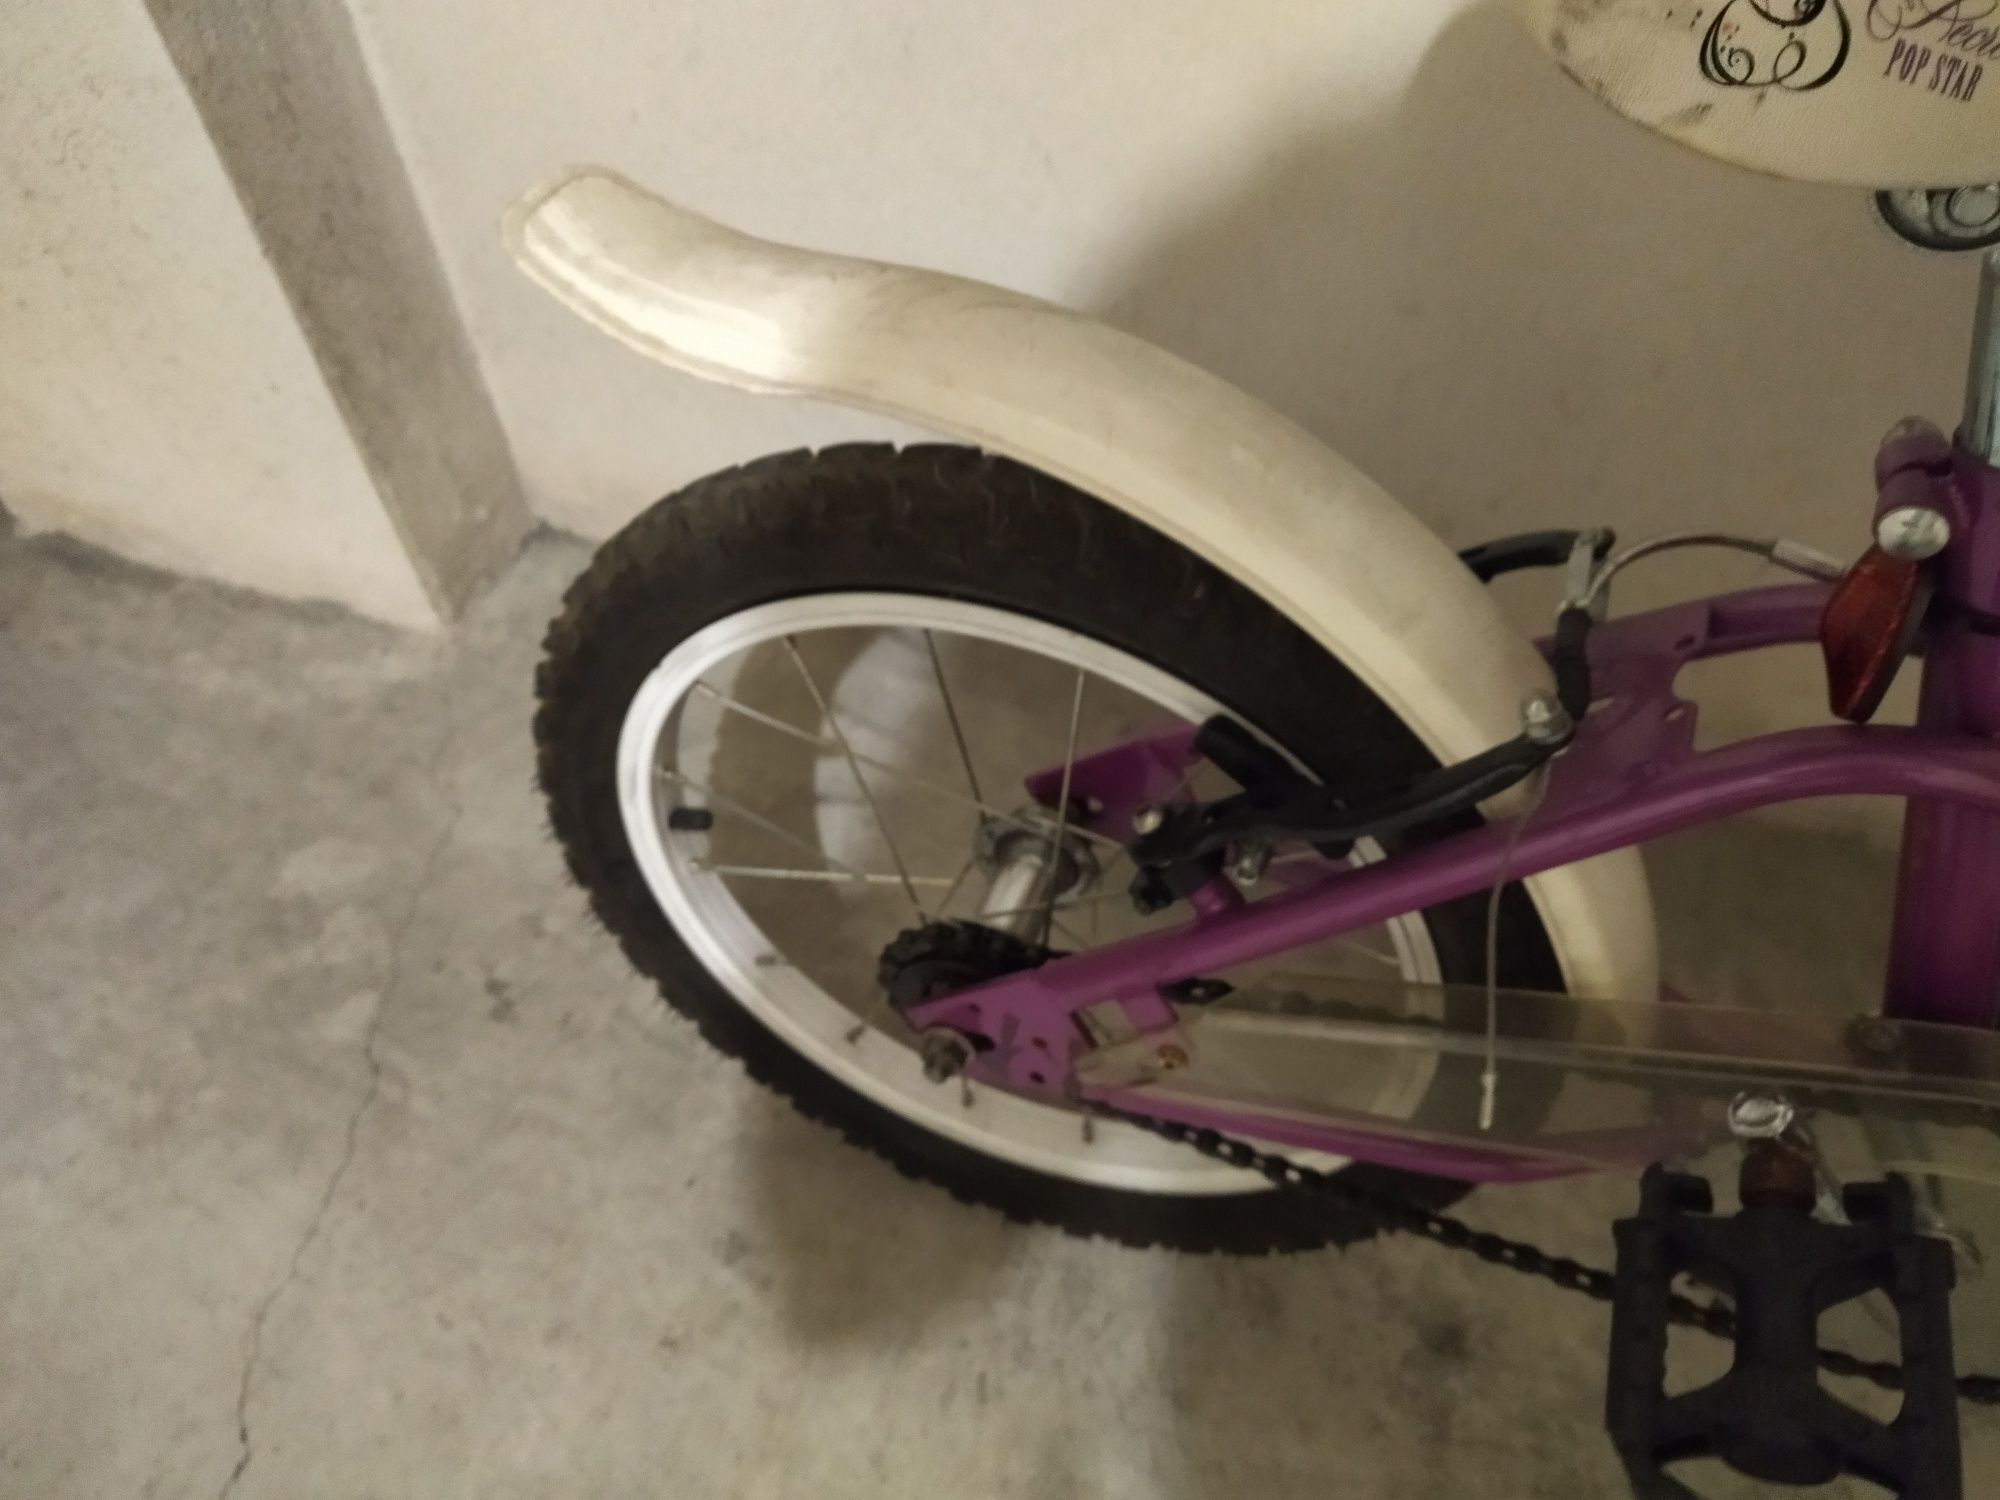 Bicicleta criança/menina roda 20